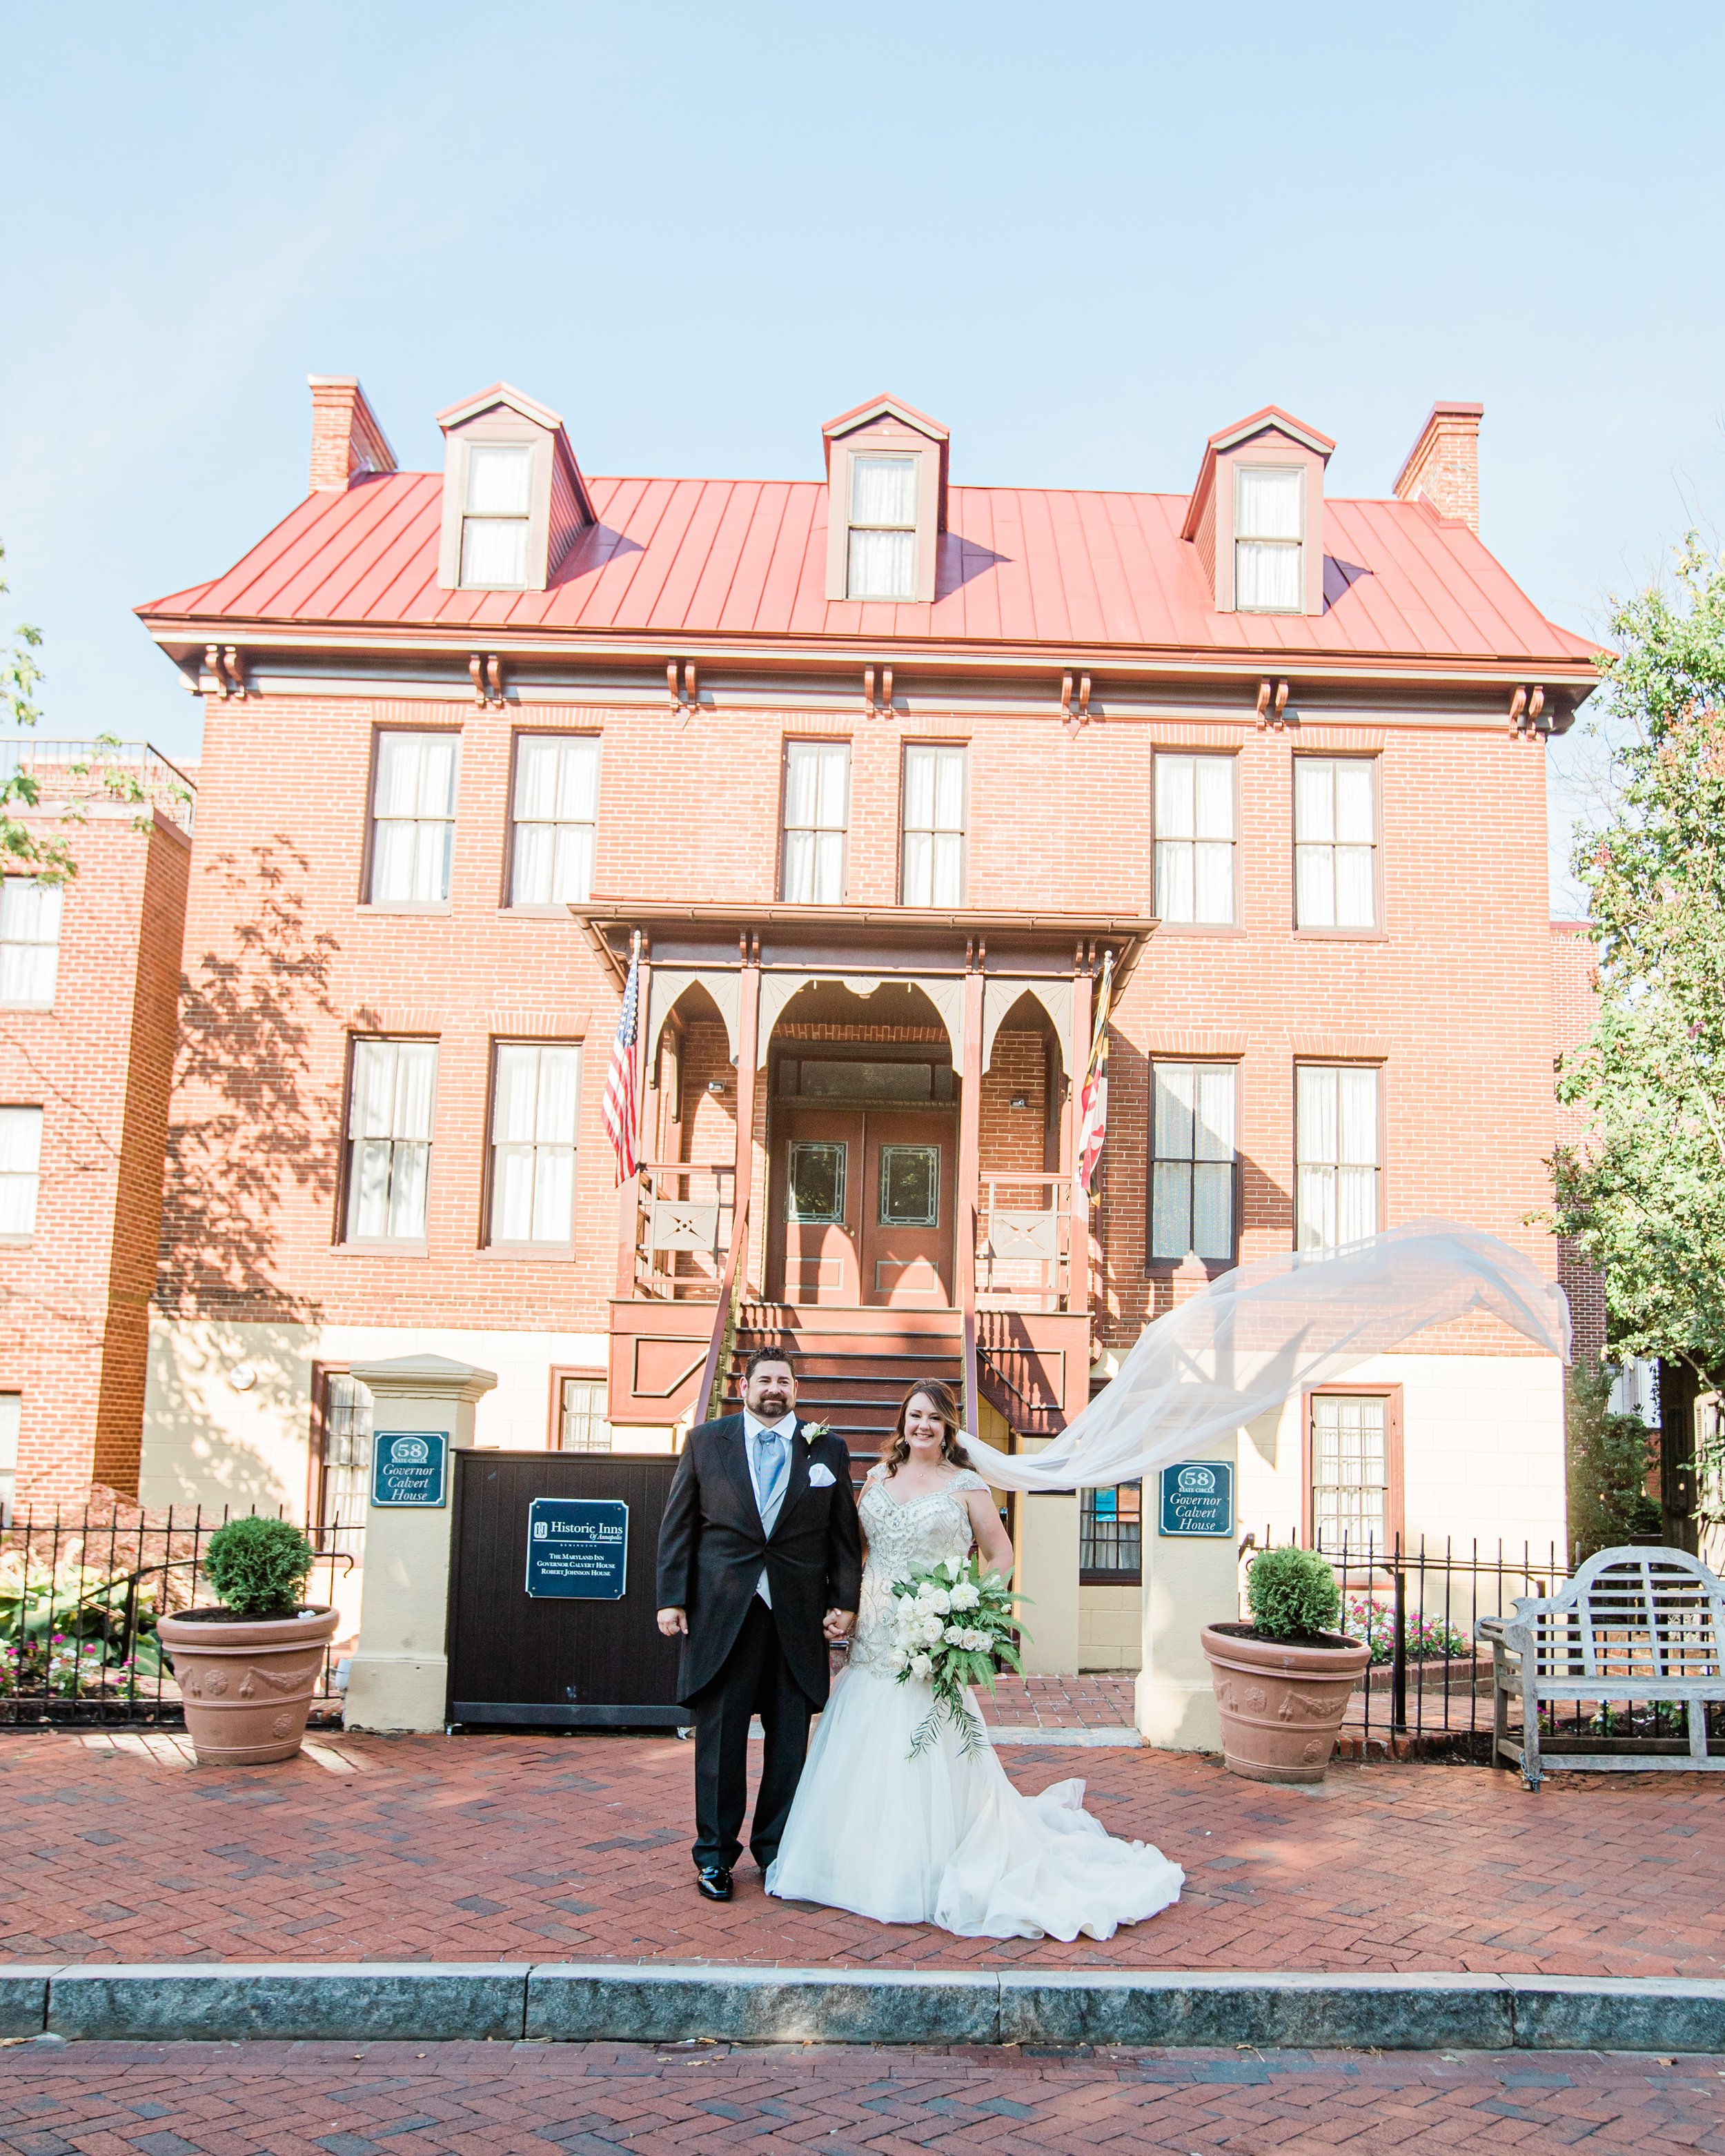 Governor Calverts House Wedding Historic Inn Megapixels Media Photography Destination Wedding Photographers in Annapolis Maryland -96.jpg